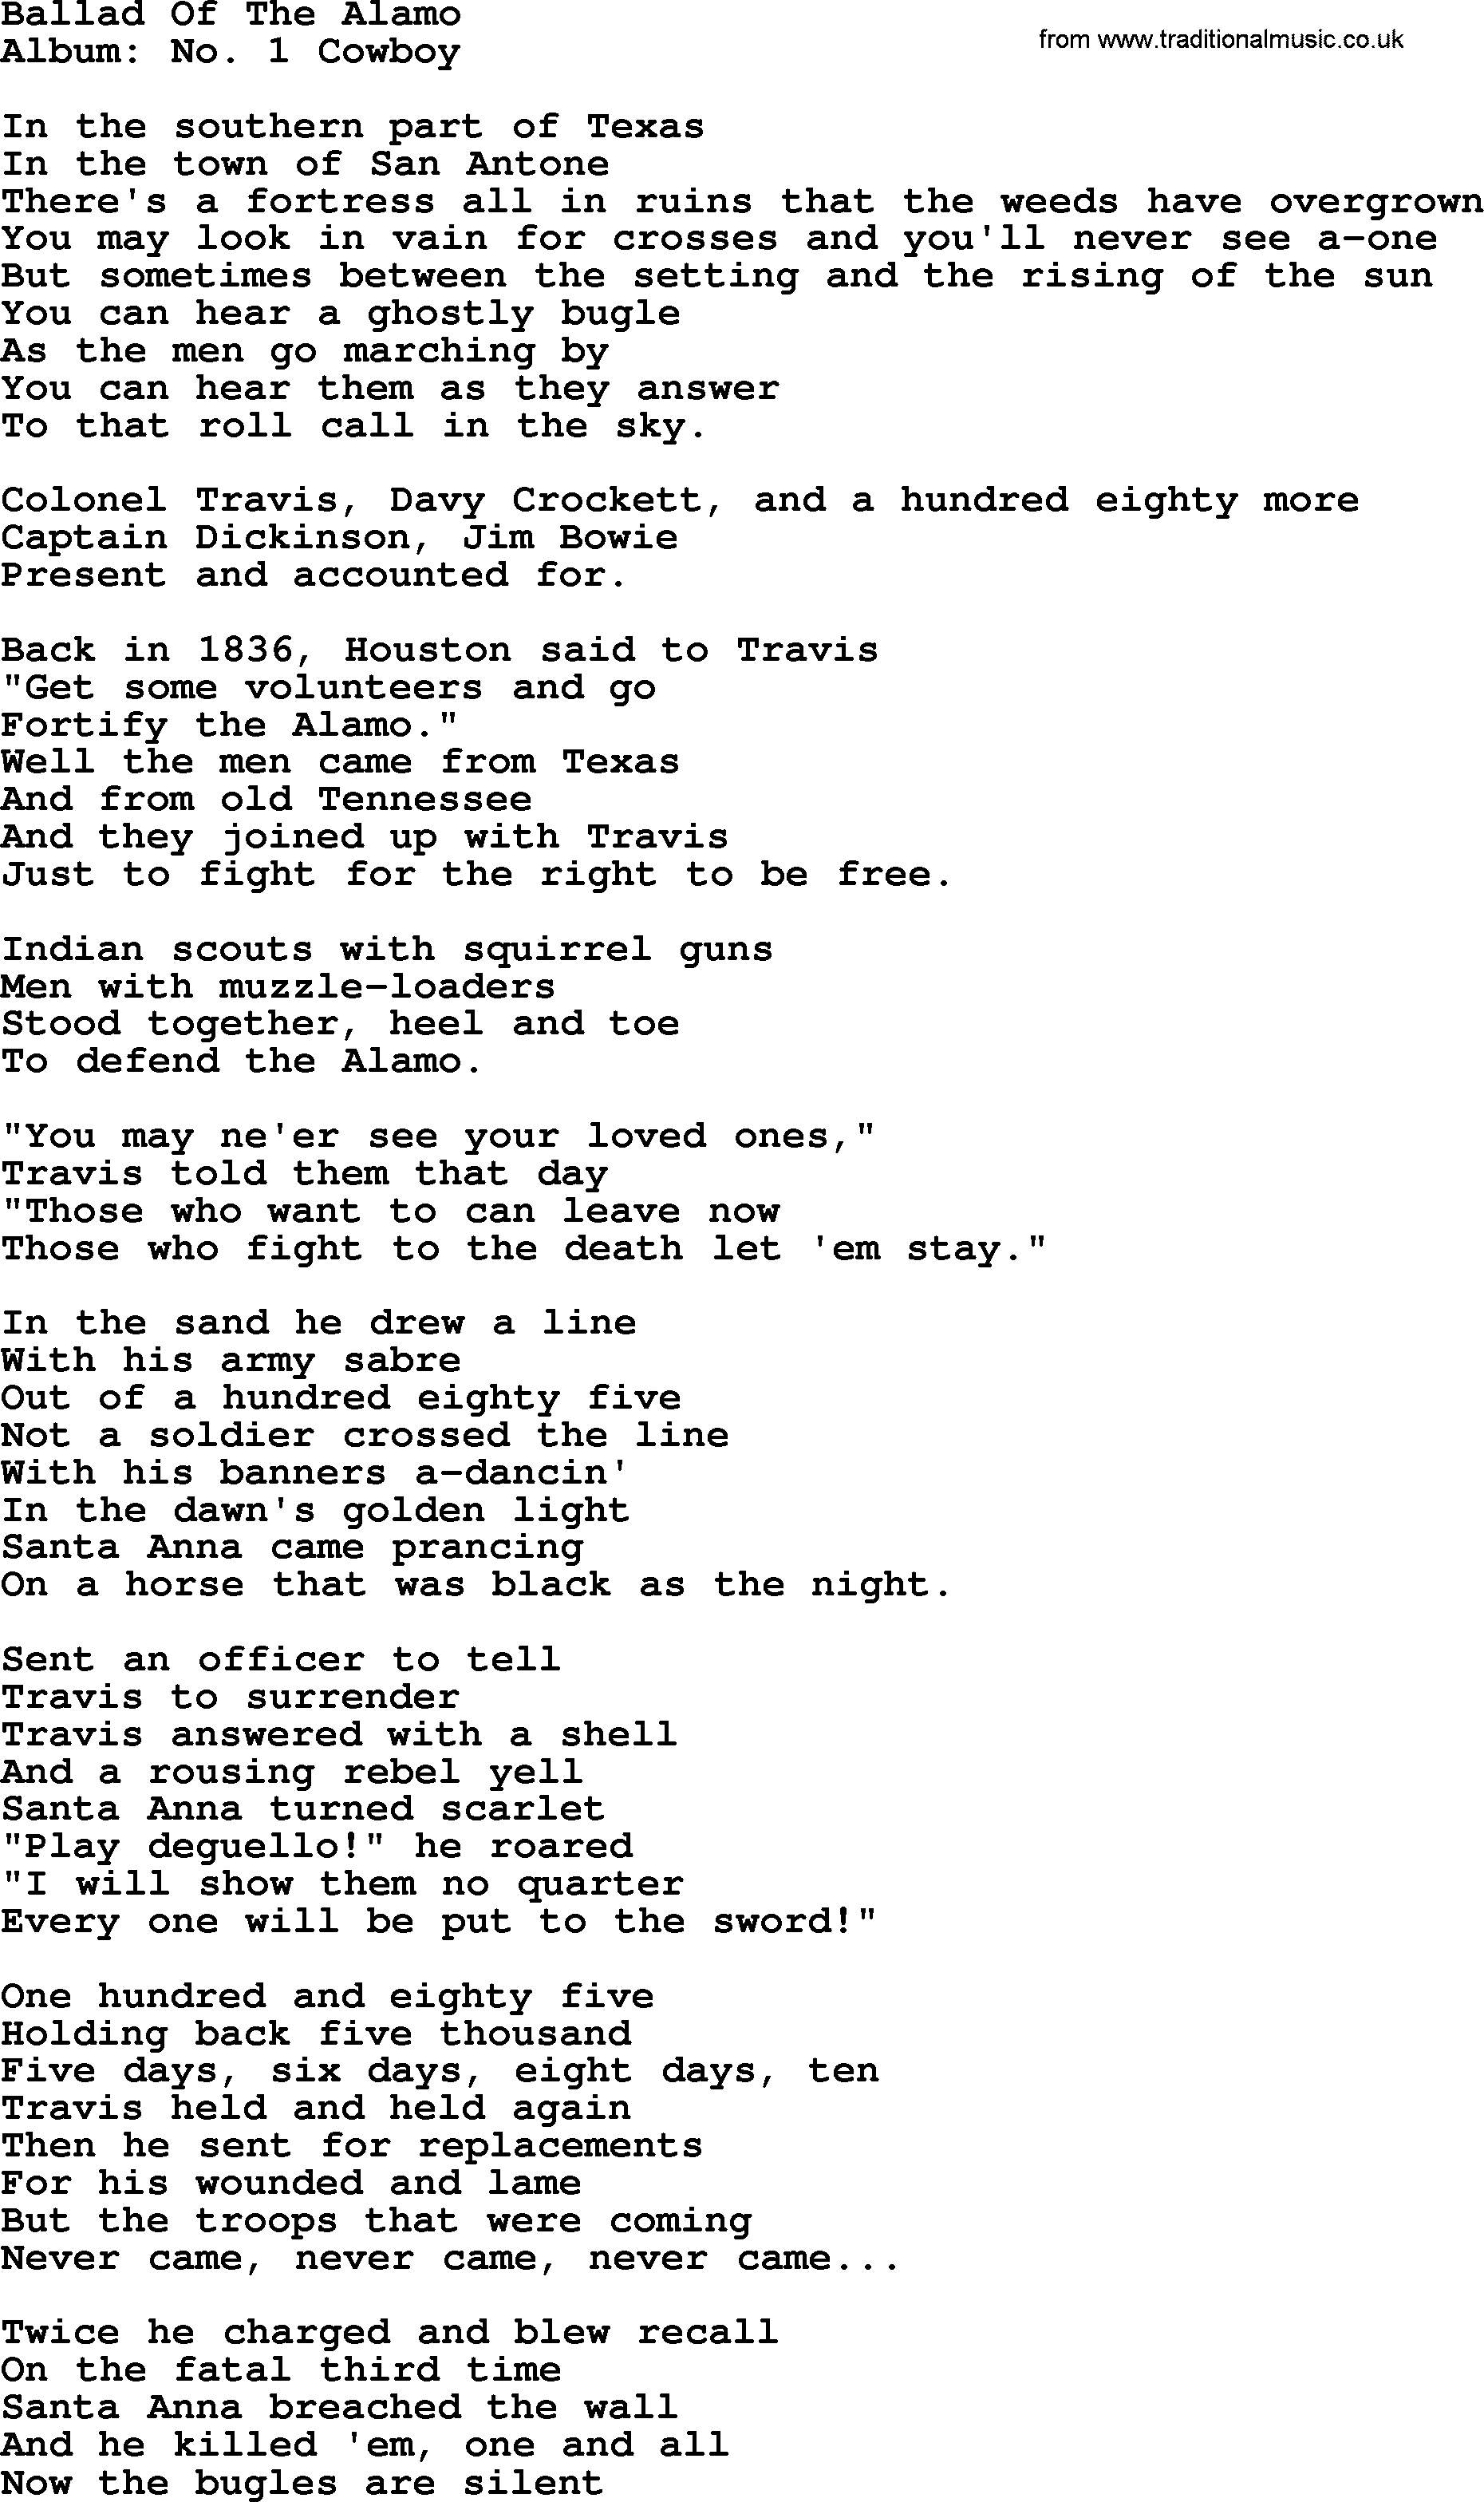 Marty Robbins song: Ballad Of The Alamo, lyrics